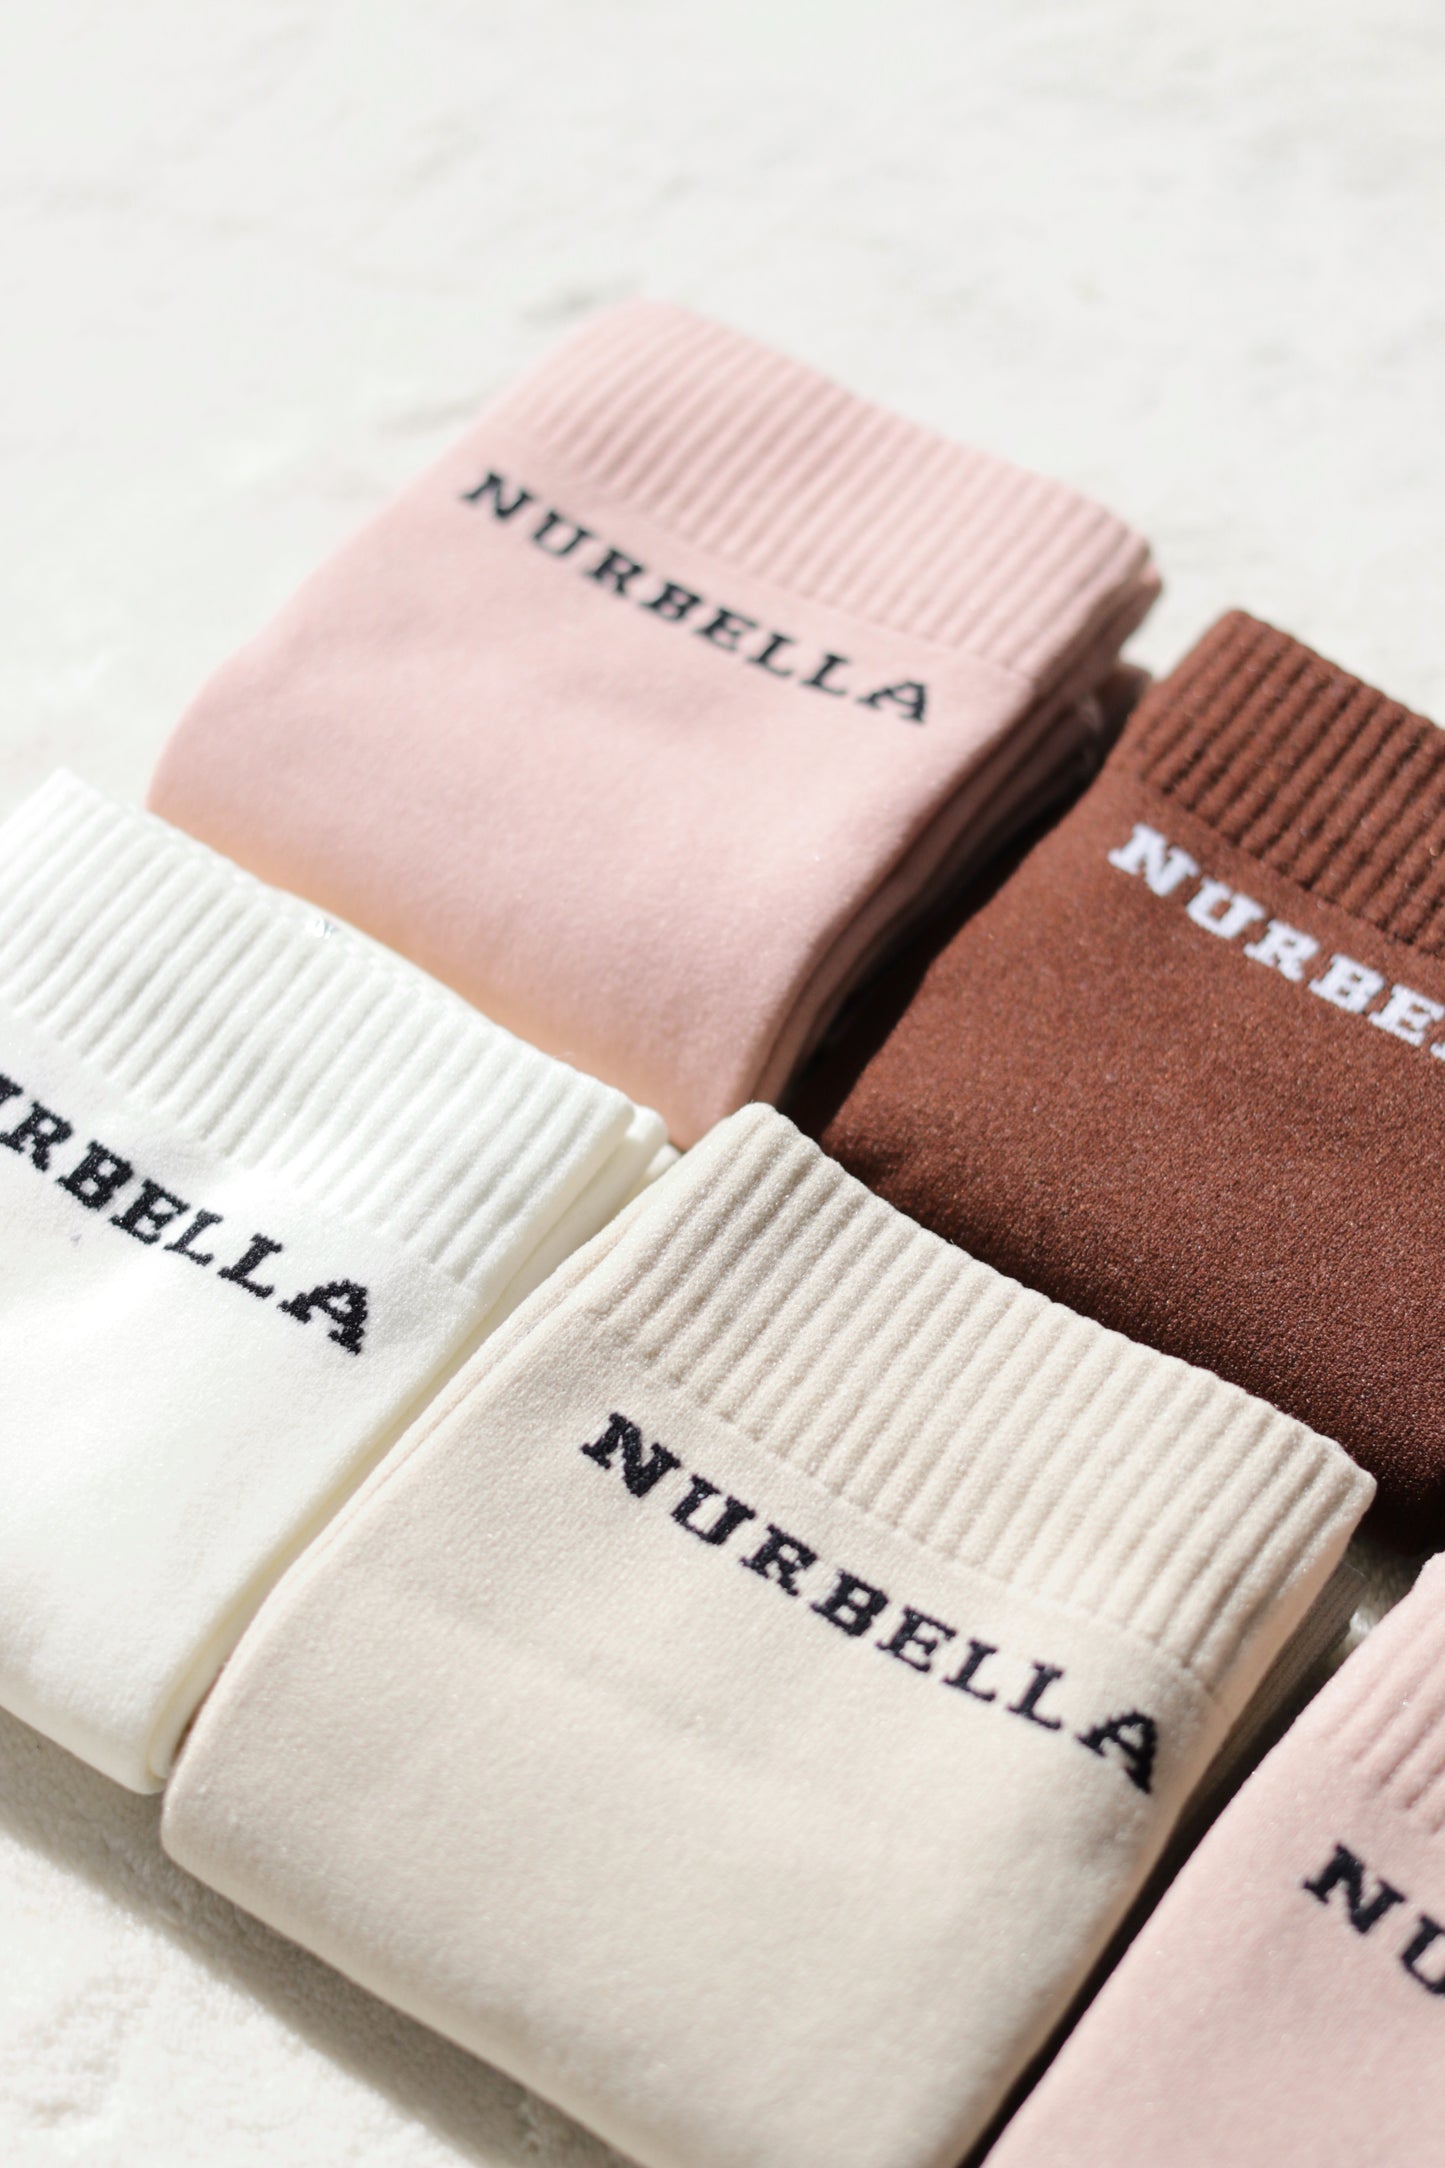 Nurbella Socks